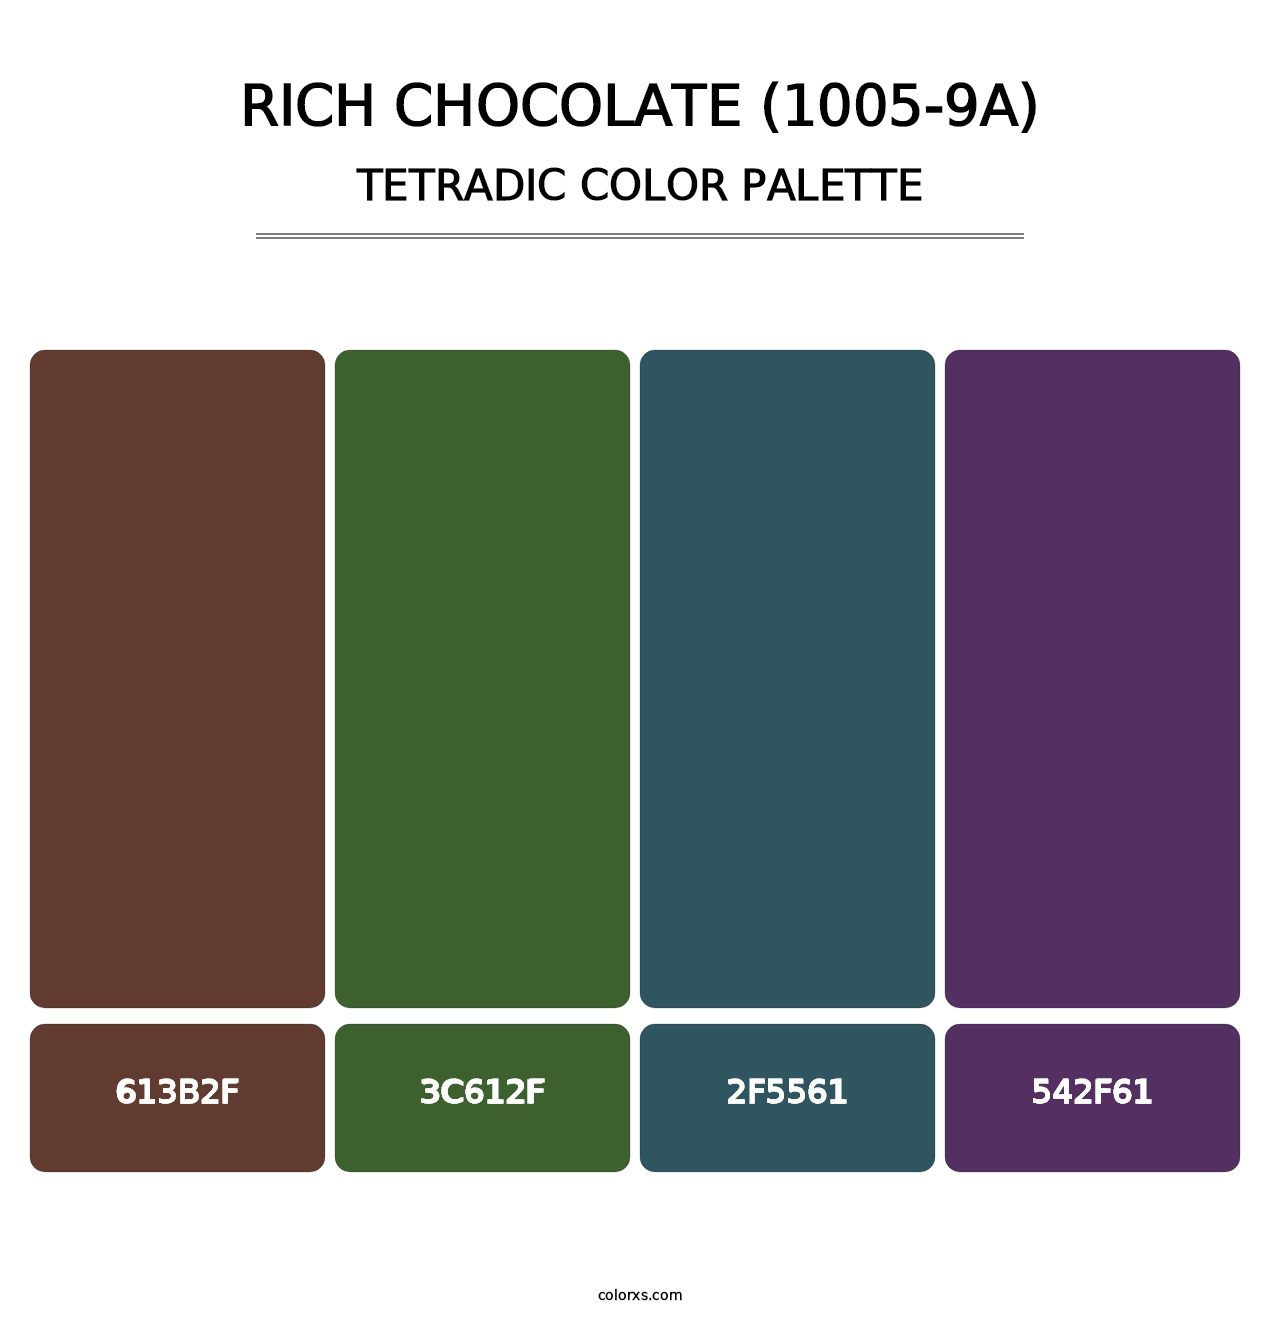 Rich Chocolate (1005-9A) - Tetradic Color Palette